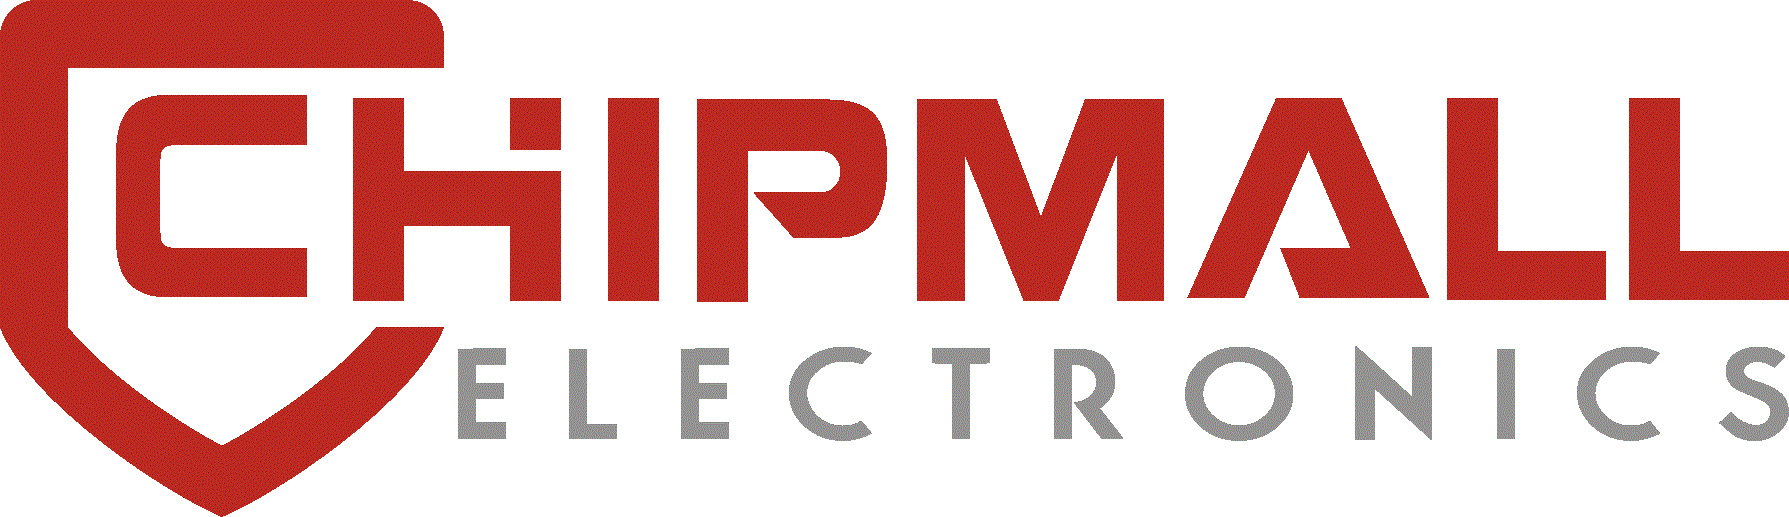 Electronics limited. Electronics логотип. CHIPMALL. Richardson Electronics, Ltd. NM Electronics логотип.